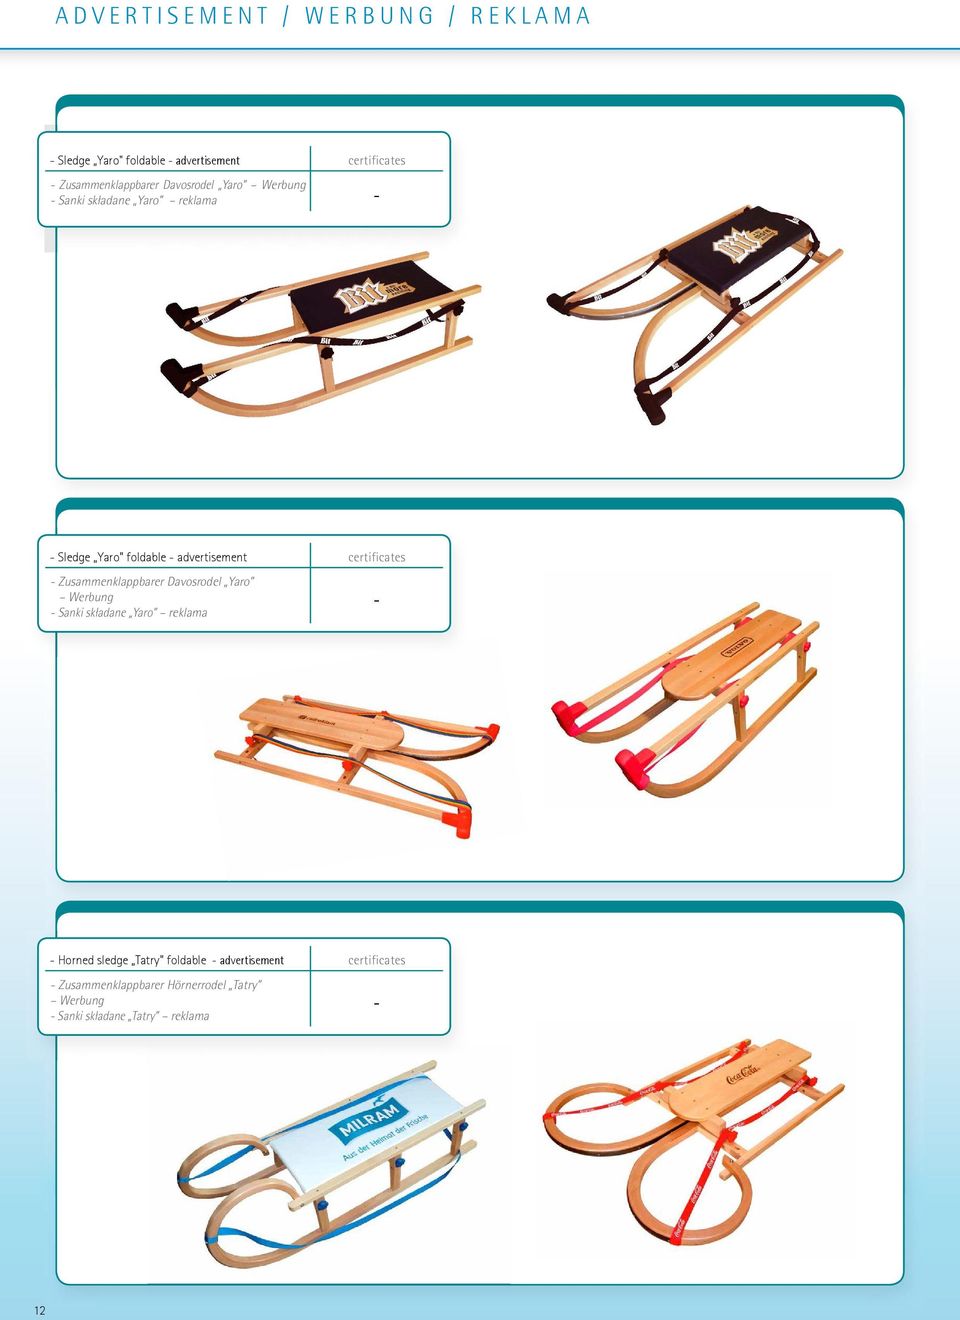 - Zusammenklappbarer Davosrodel Yaro Werbung - Sanki składane Yaro reklama - - Horned sledge Tatry" foldable